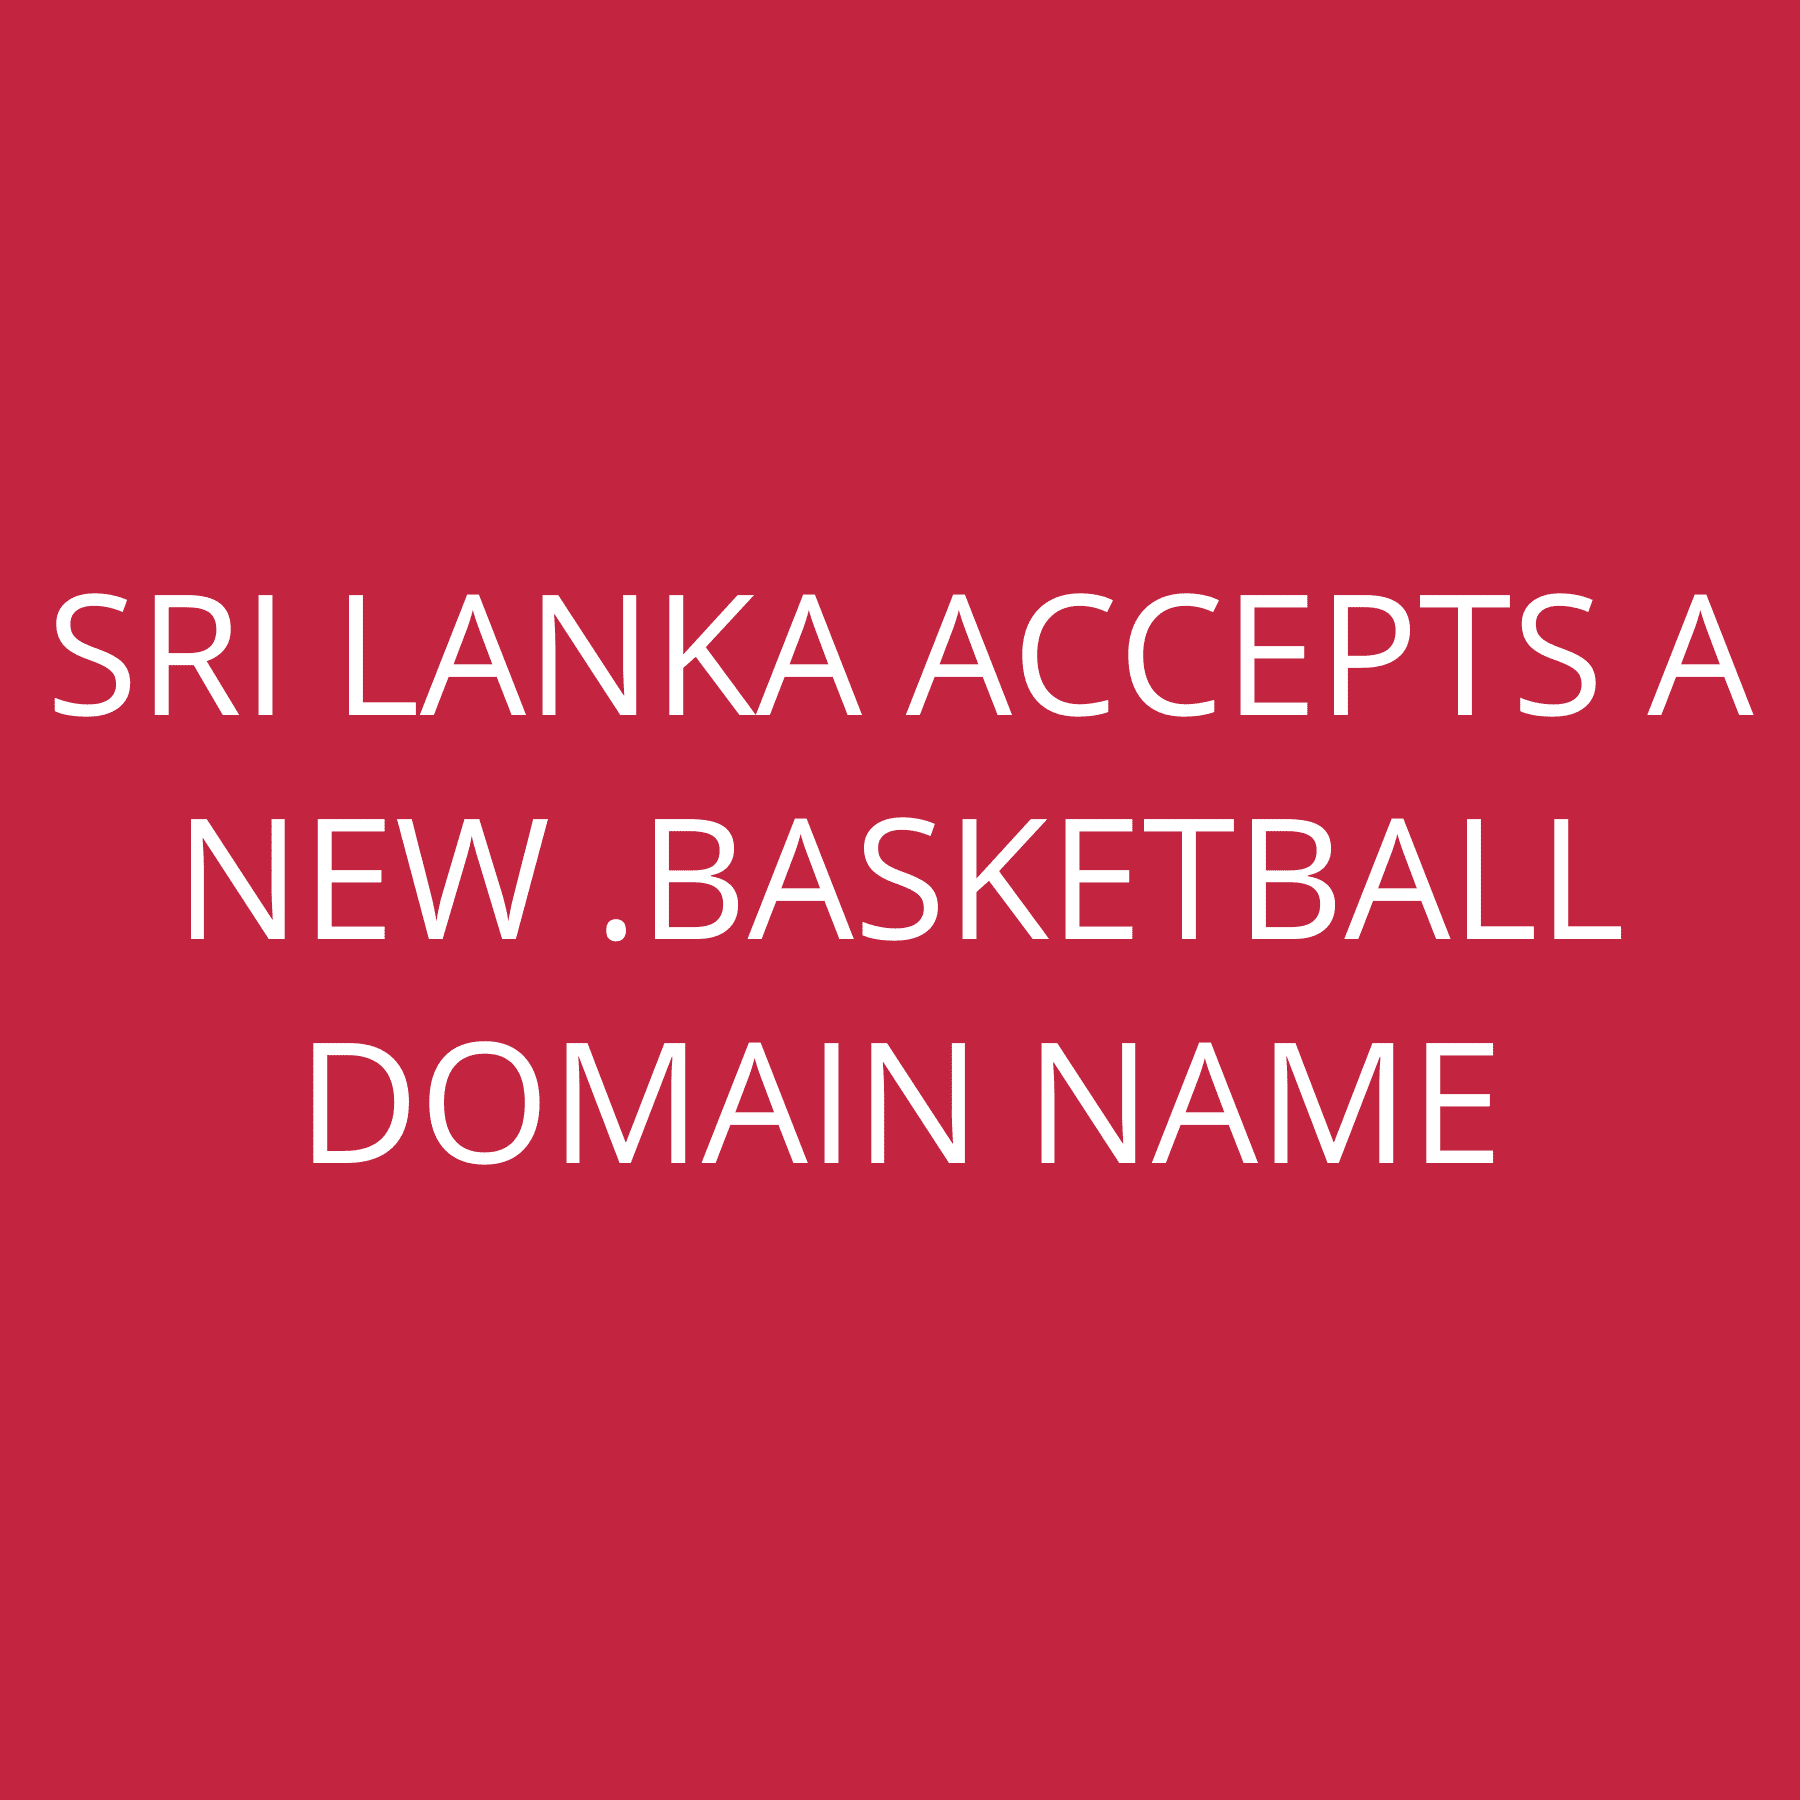 Sri Lanka accepts a new  .basketball domain name